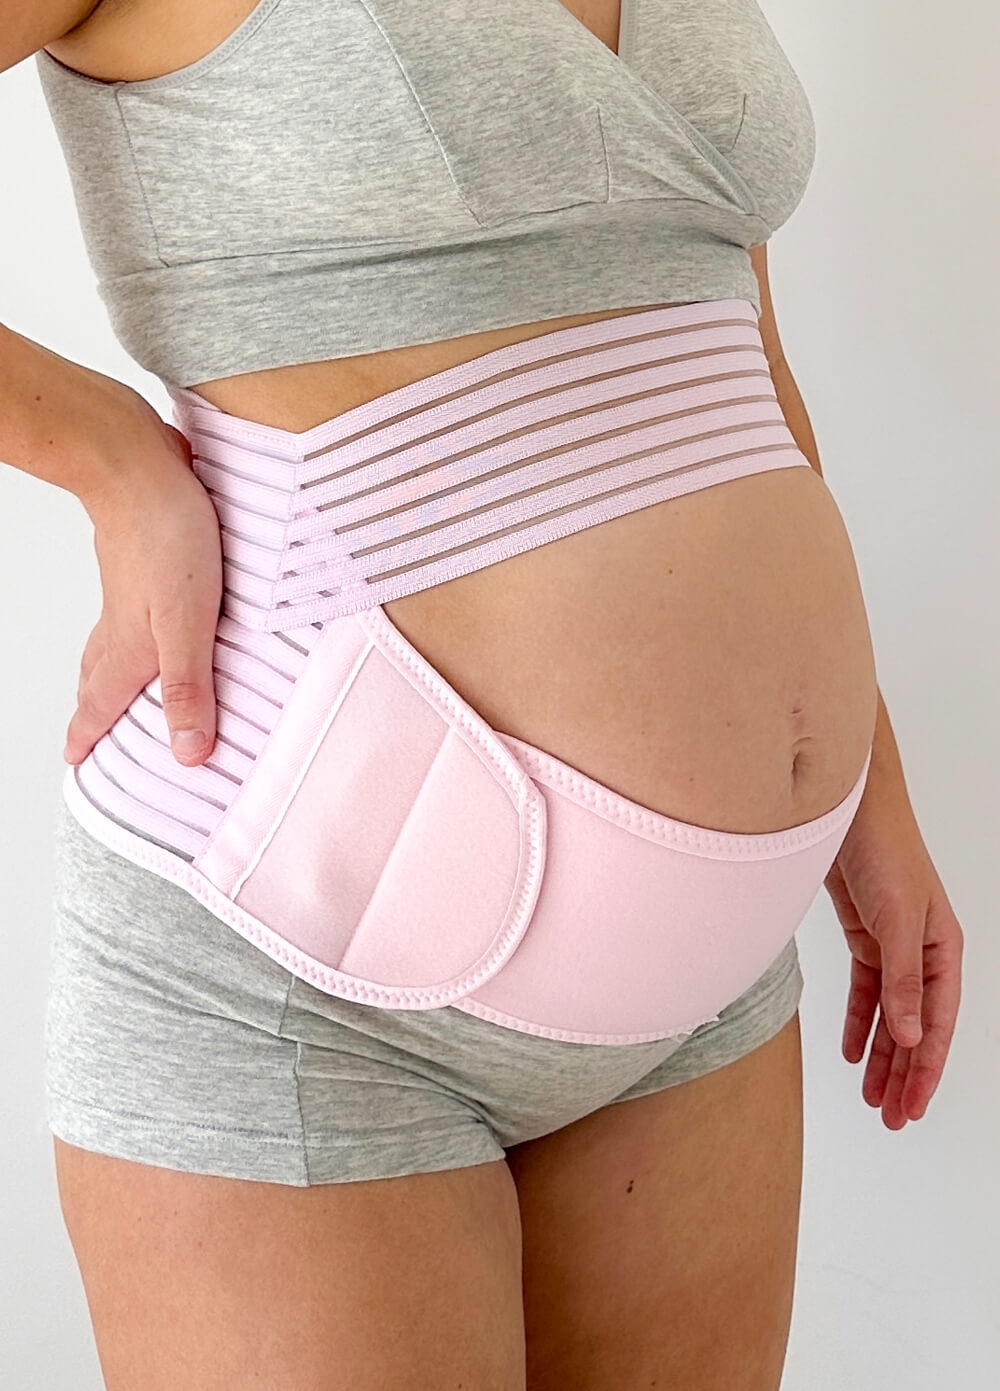 Pregnancy Belly Belt